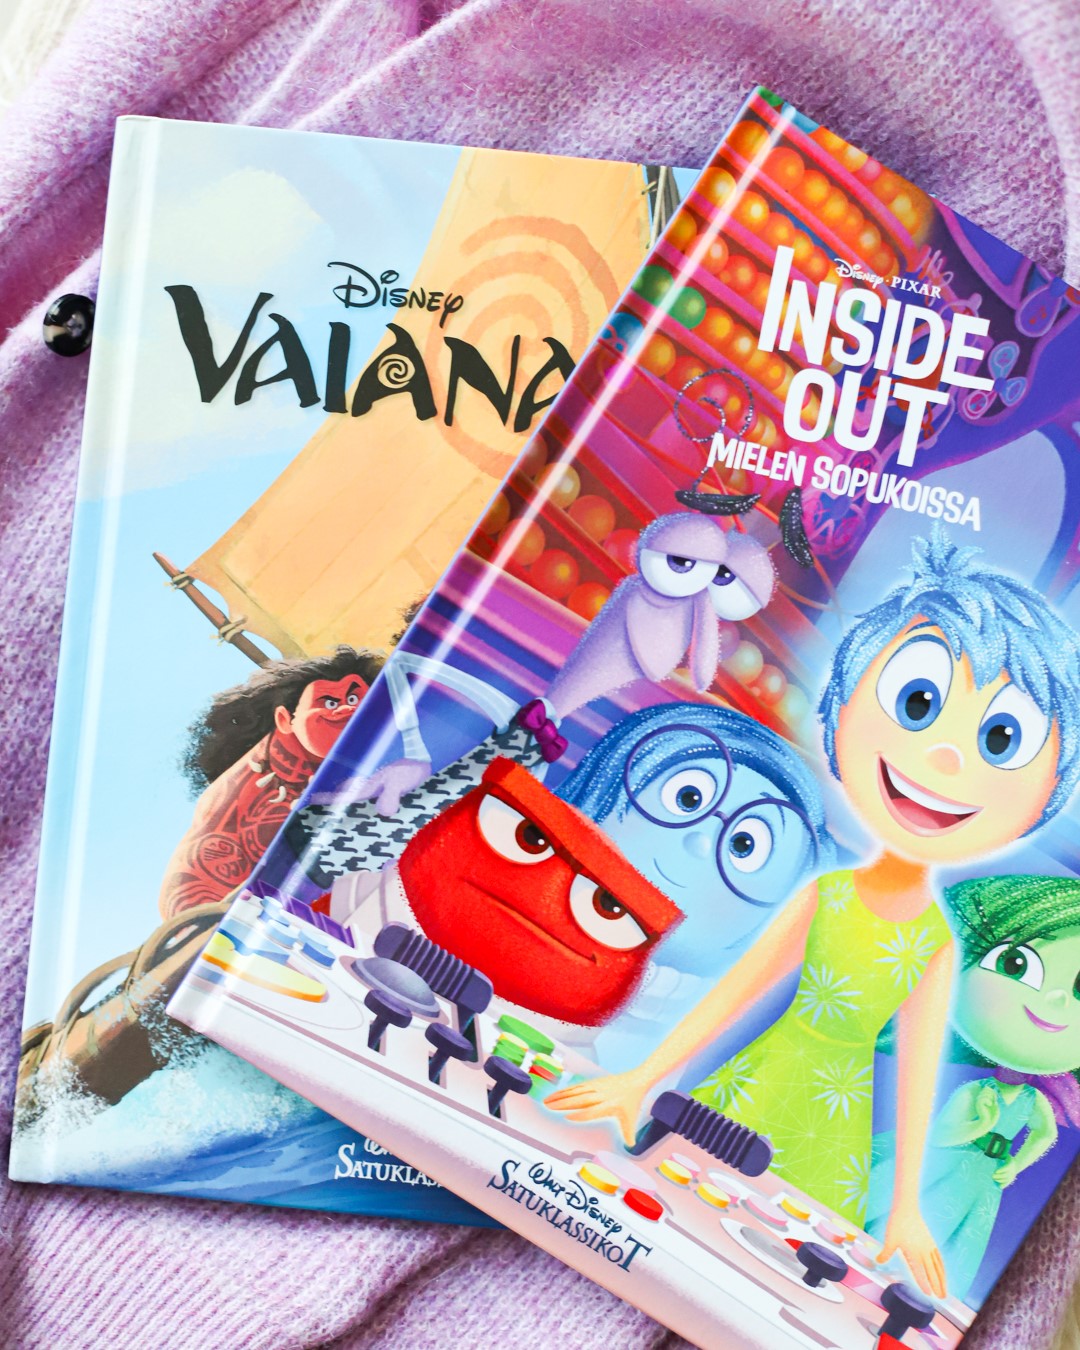 Disney Inside out ja Vaiana -kirjat